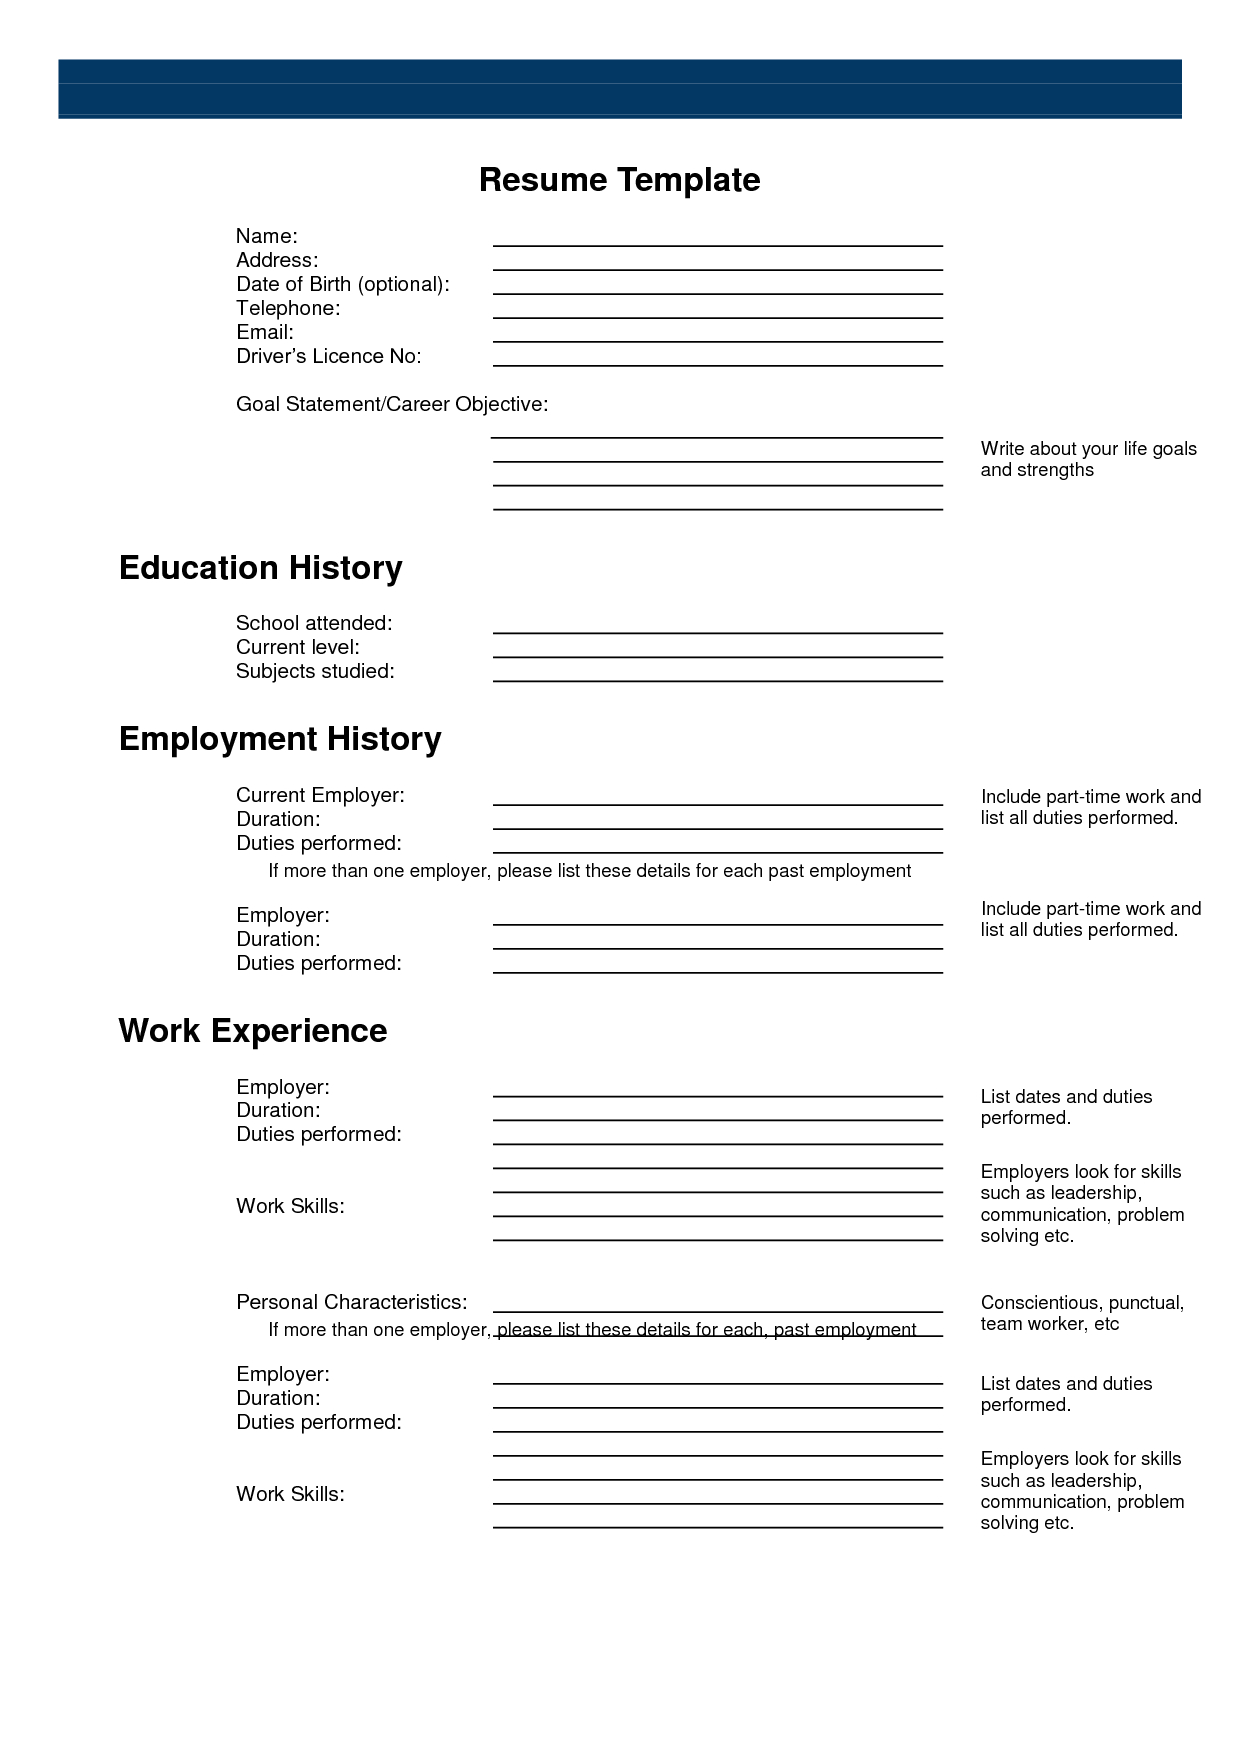 Free Printable Professional Resume Template - Resume Templates - Free Printable Resume Templates